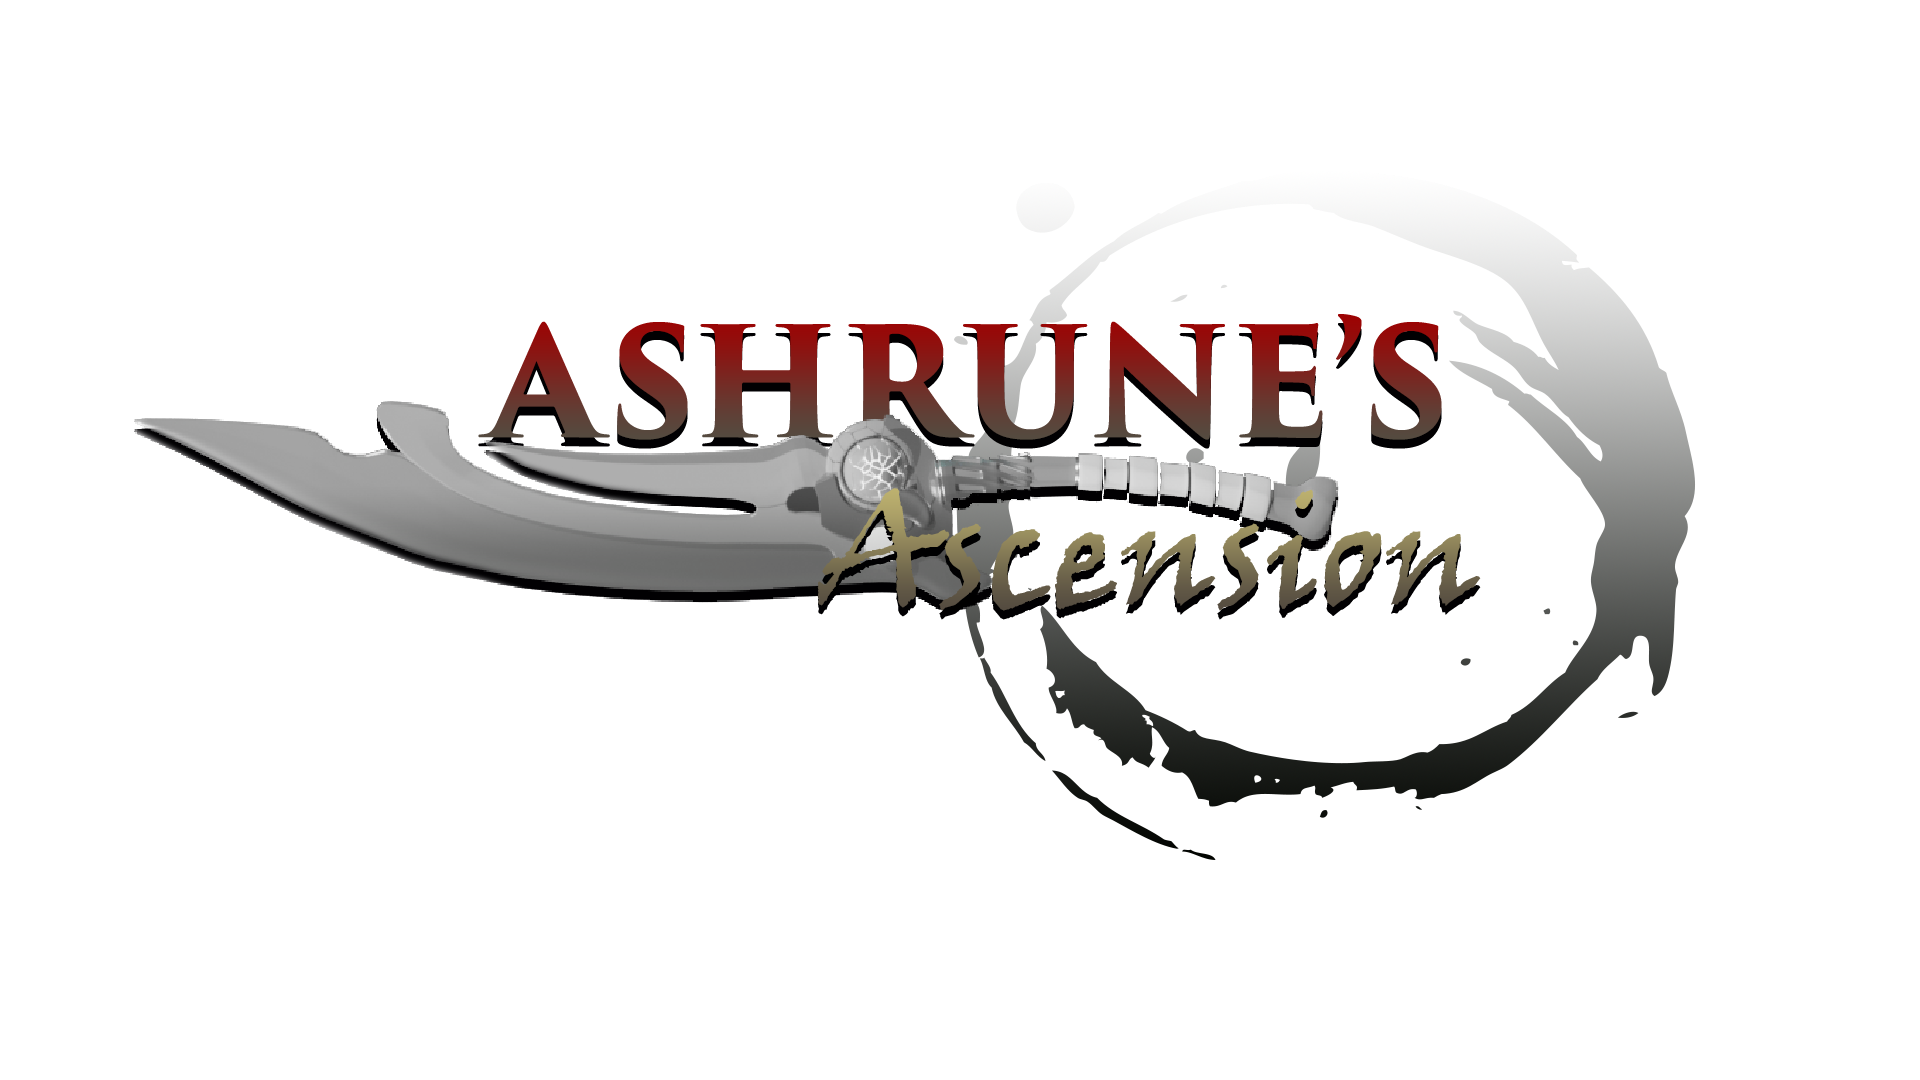 Ashrune's Ascension